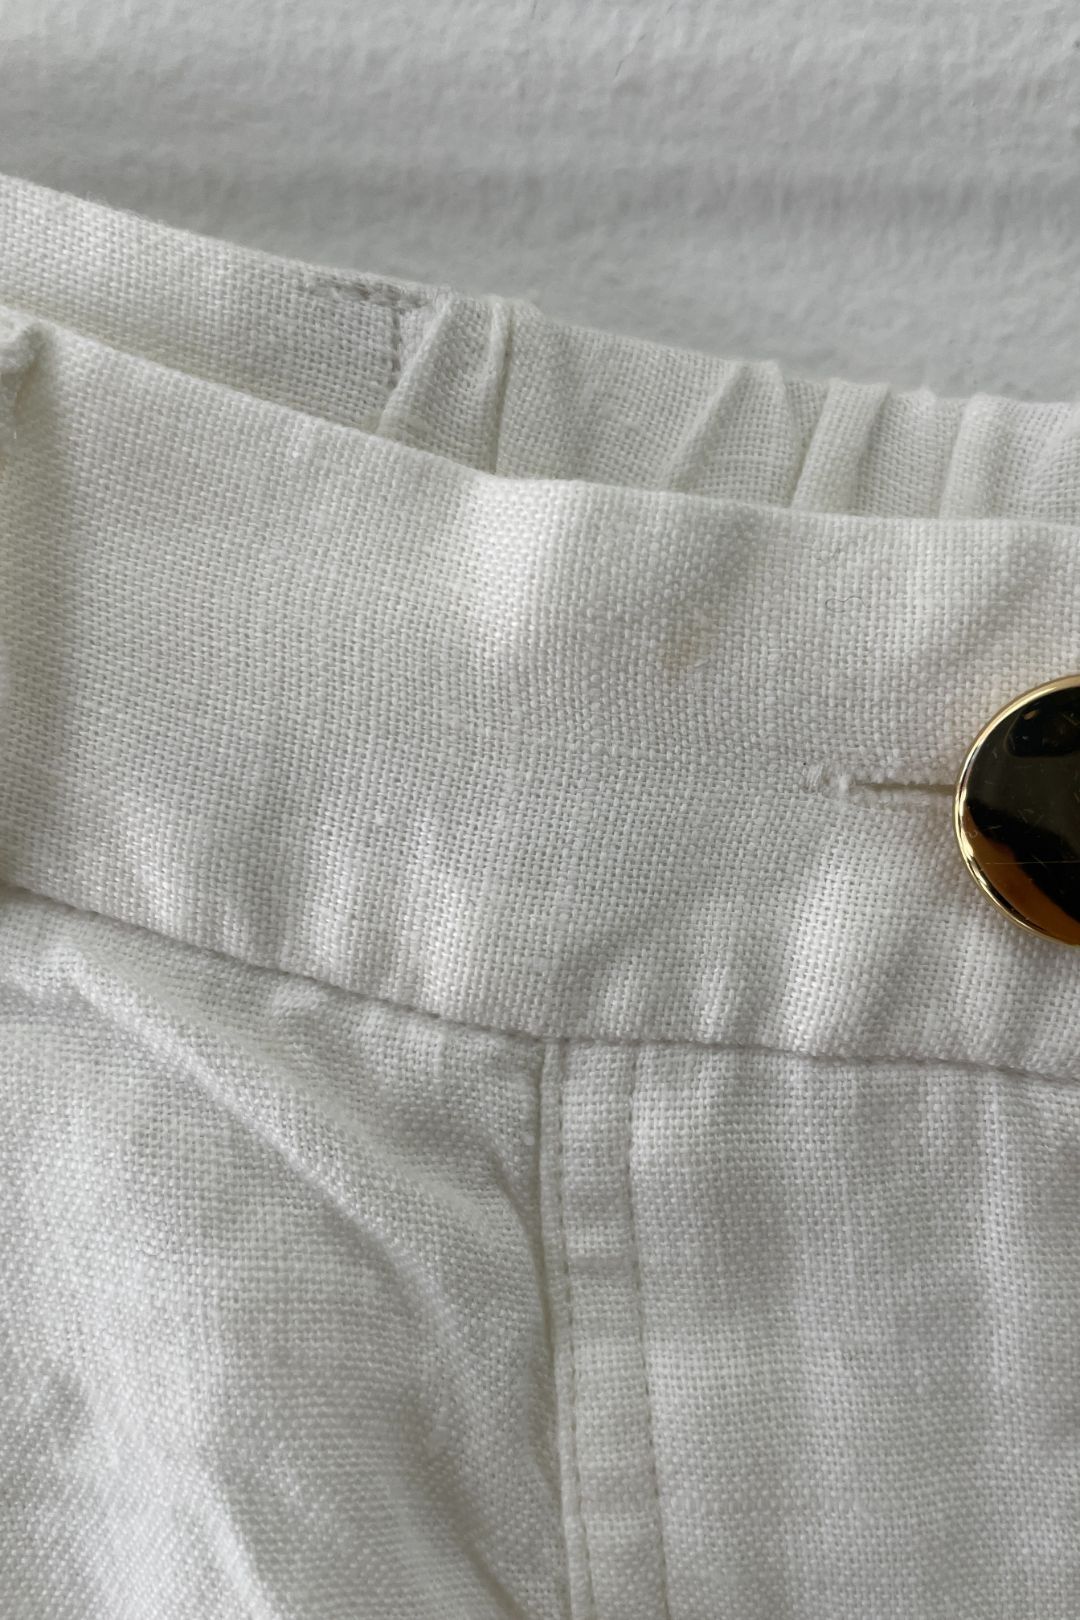 Arlington Milne - Button Front White Mini Shorts